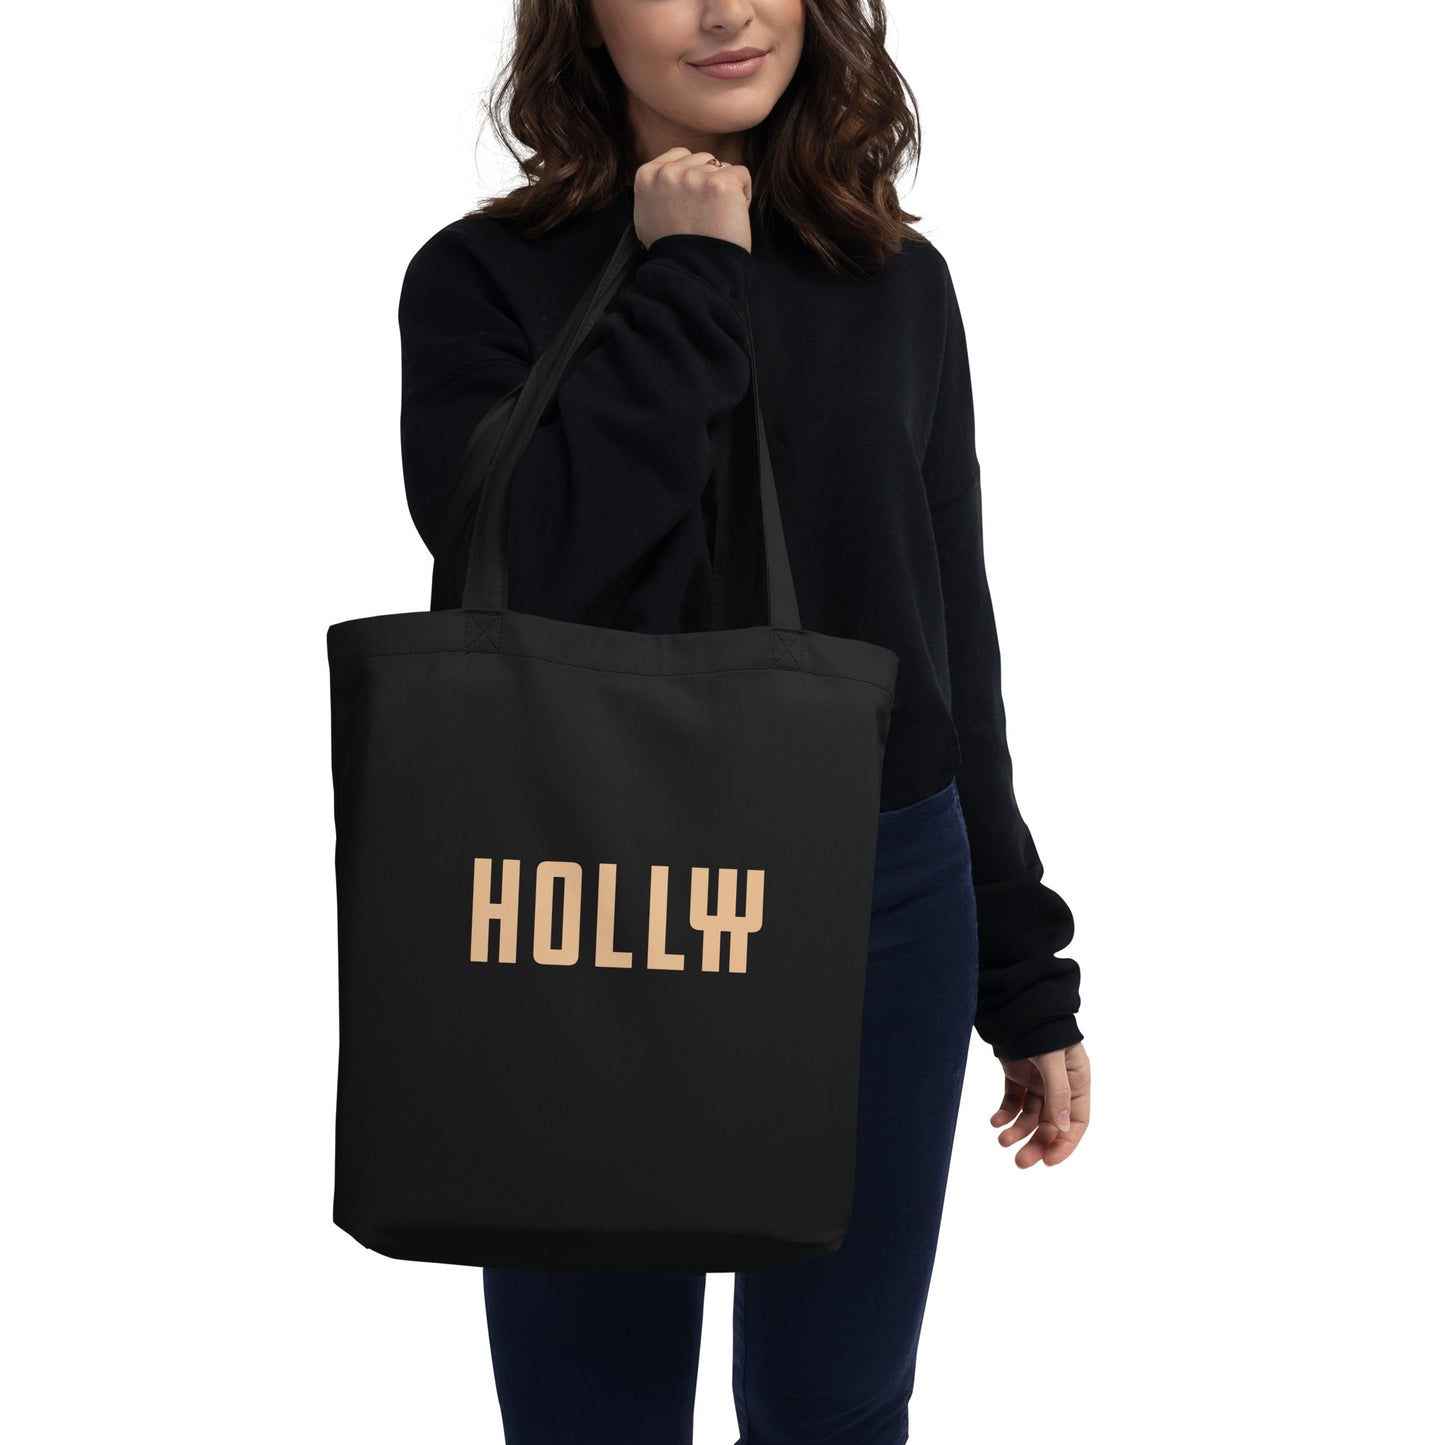 Hollyy Eco Tote Bag